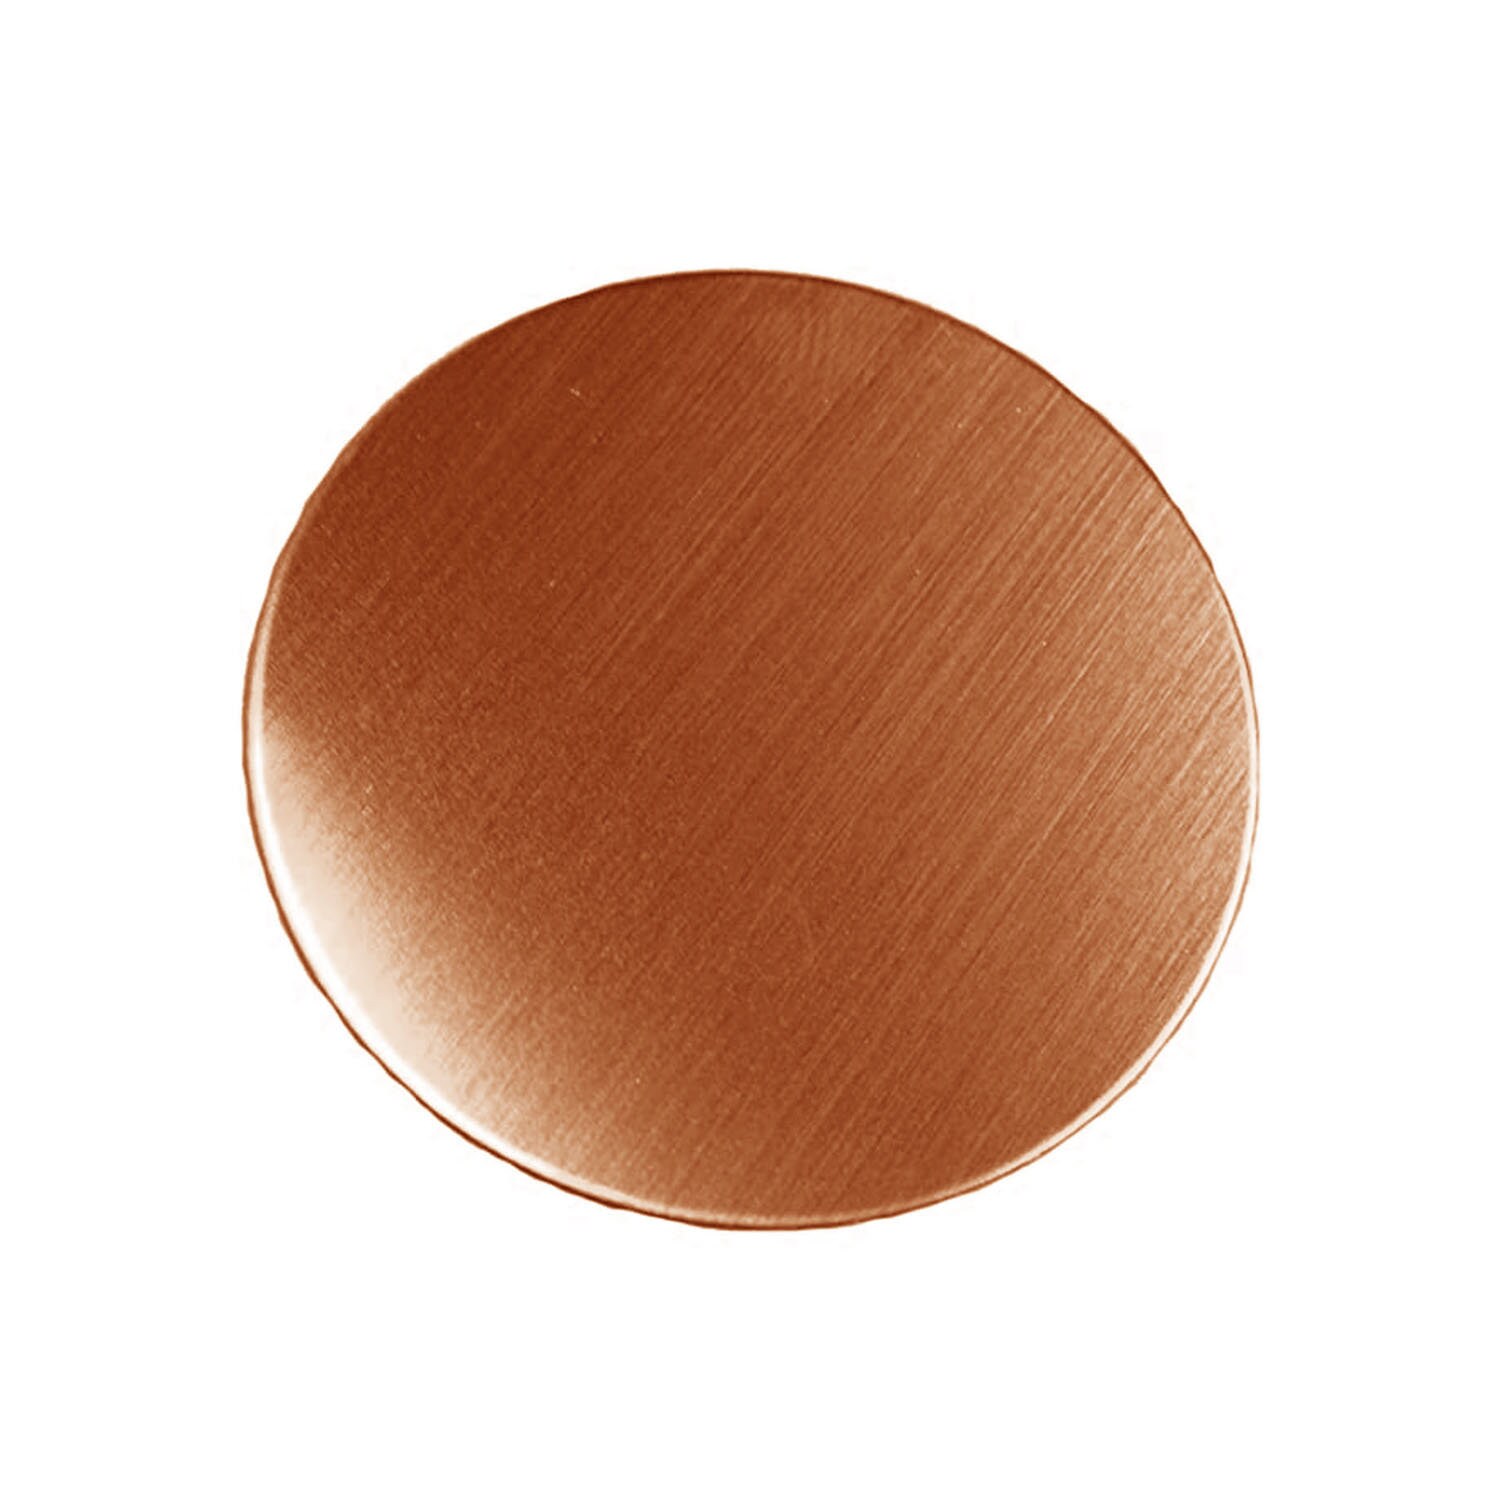 Solid Copper Open Circle Stamping Blanks - 25.5mm Diameter 24 Gauge (2)